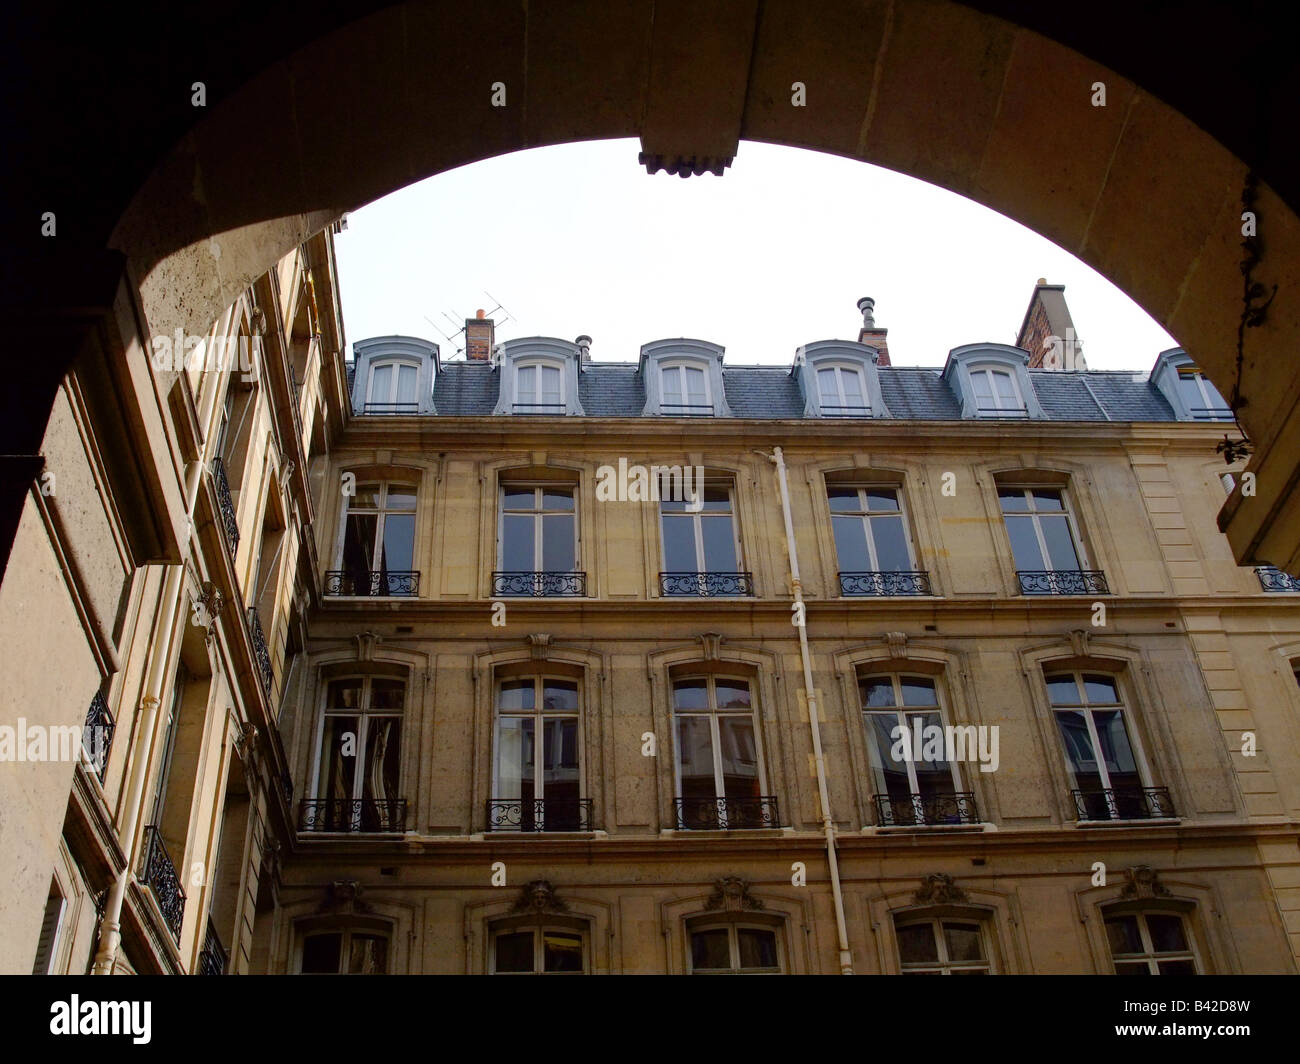 Arcade of an old building into the 8th arrondissement - 22 rue de l'Arcade - 75008 Paris city - France Stock Photo